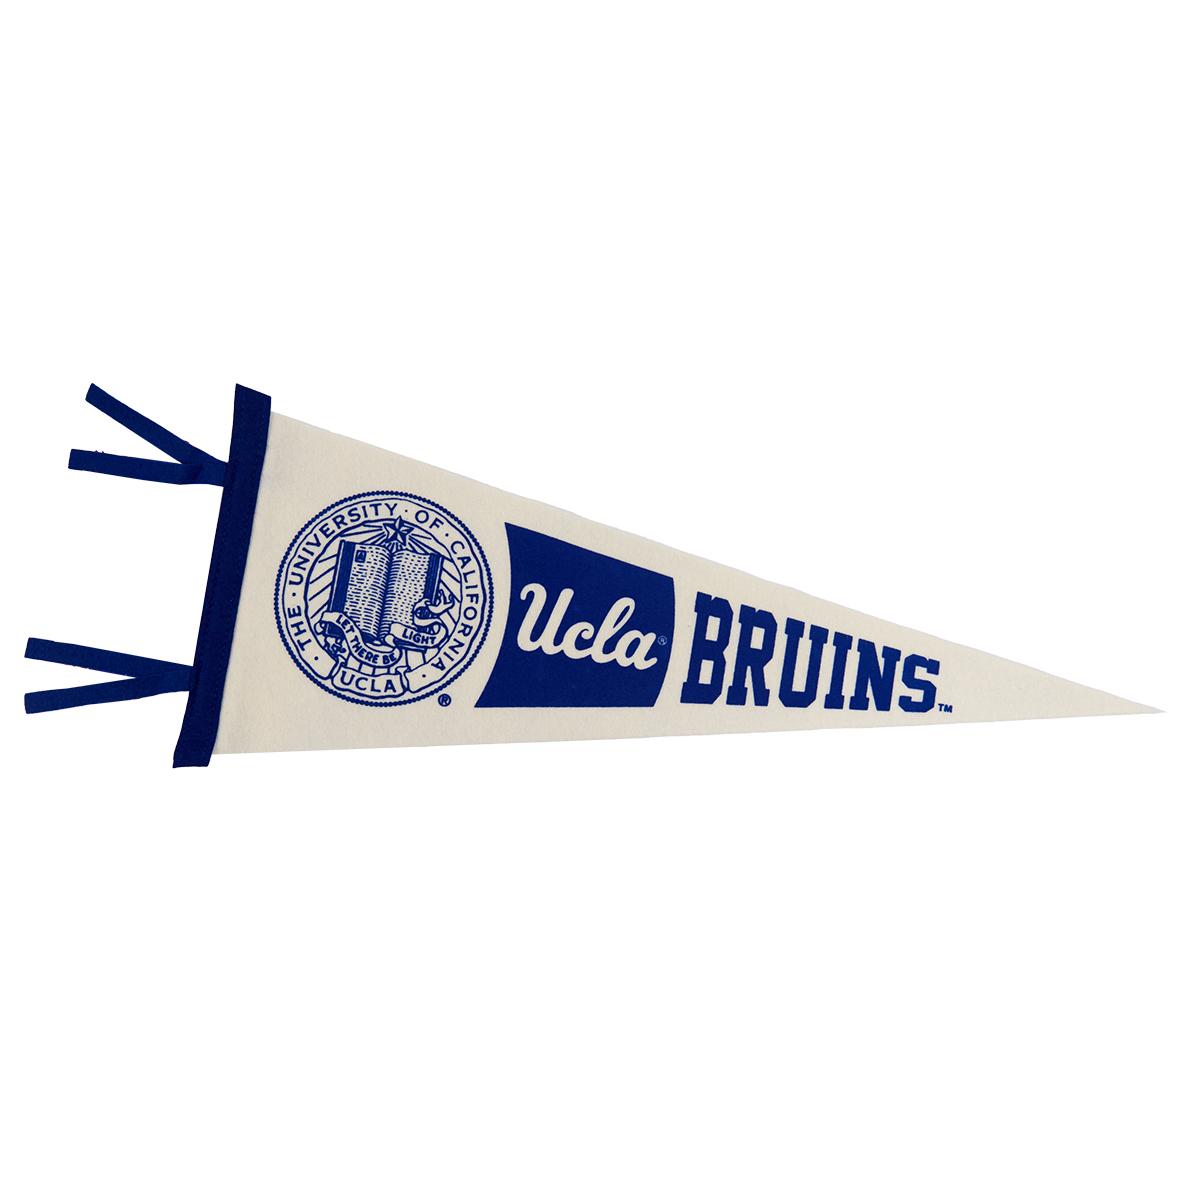 UCLA Seal Bruins Felt Pennant